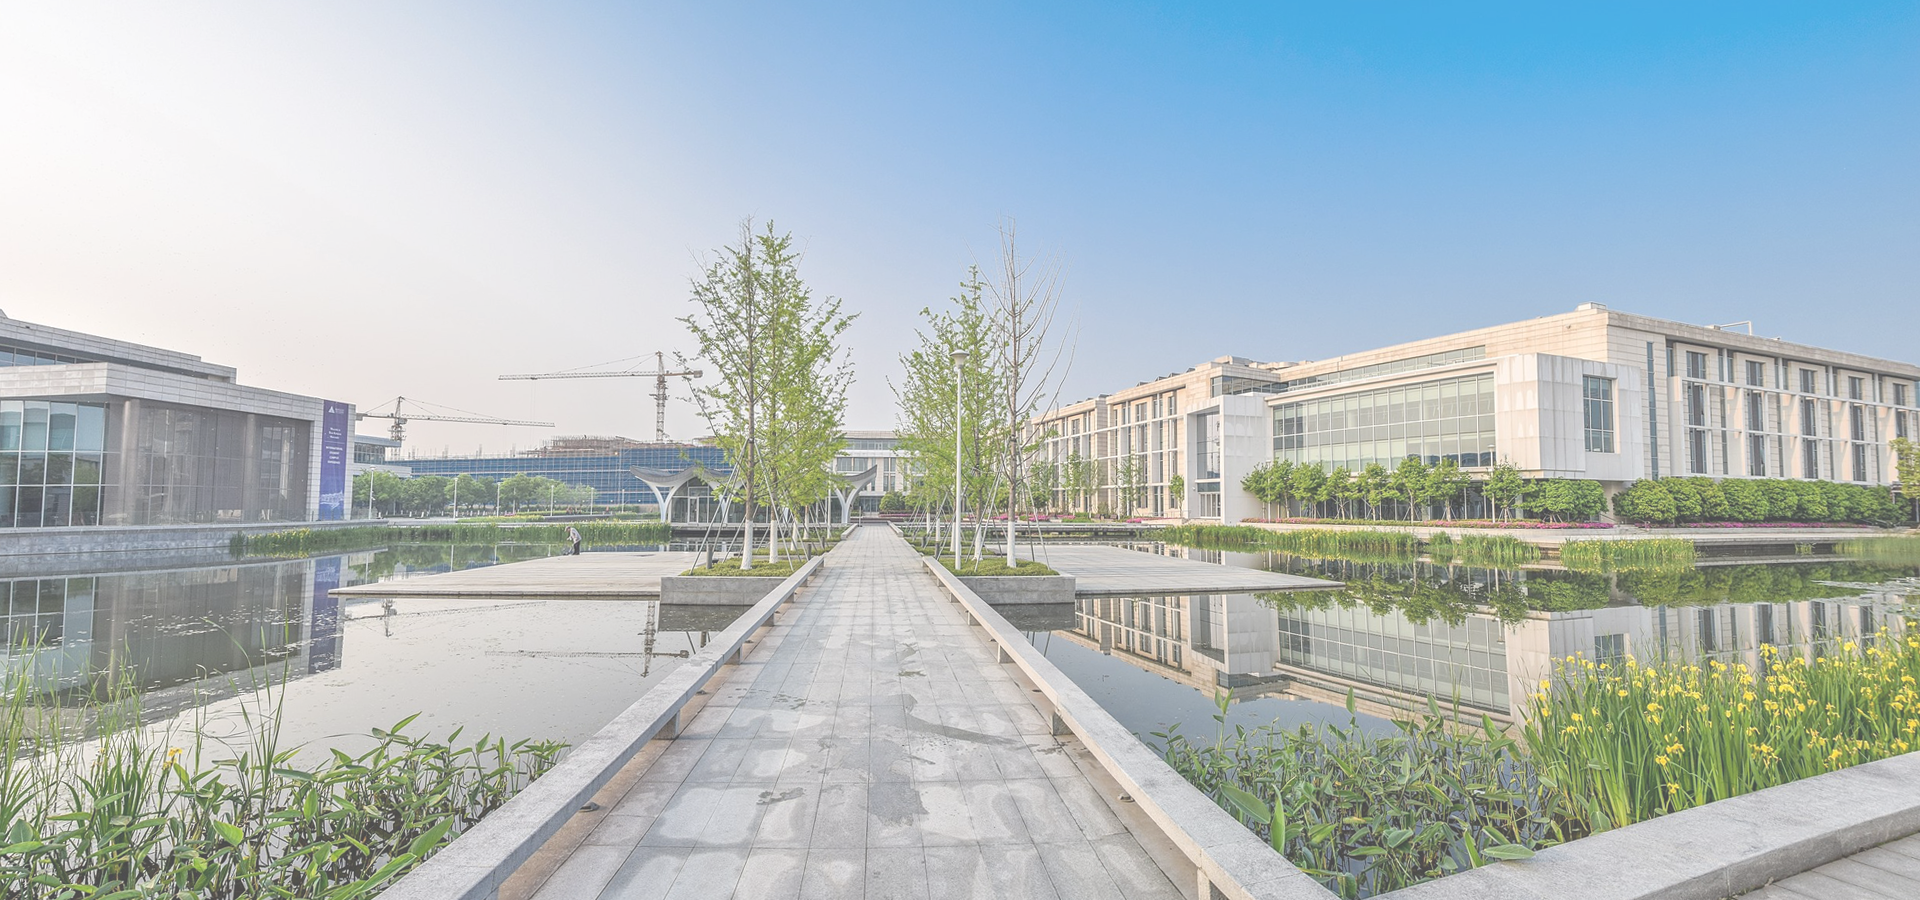 Duke Kunshan University Campus, Jiangsu, China